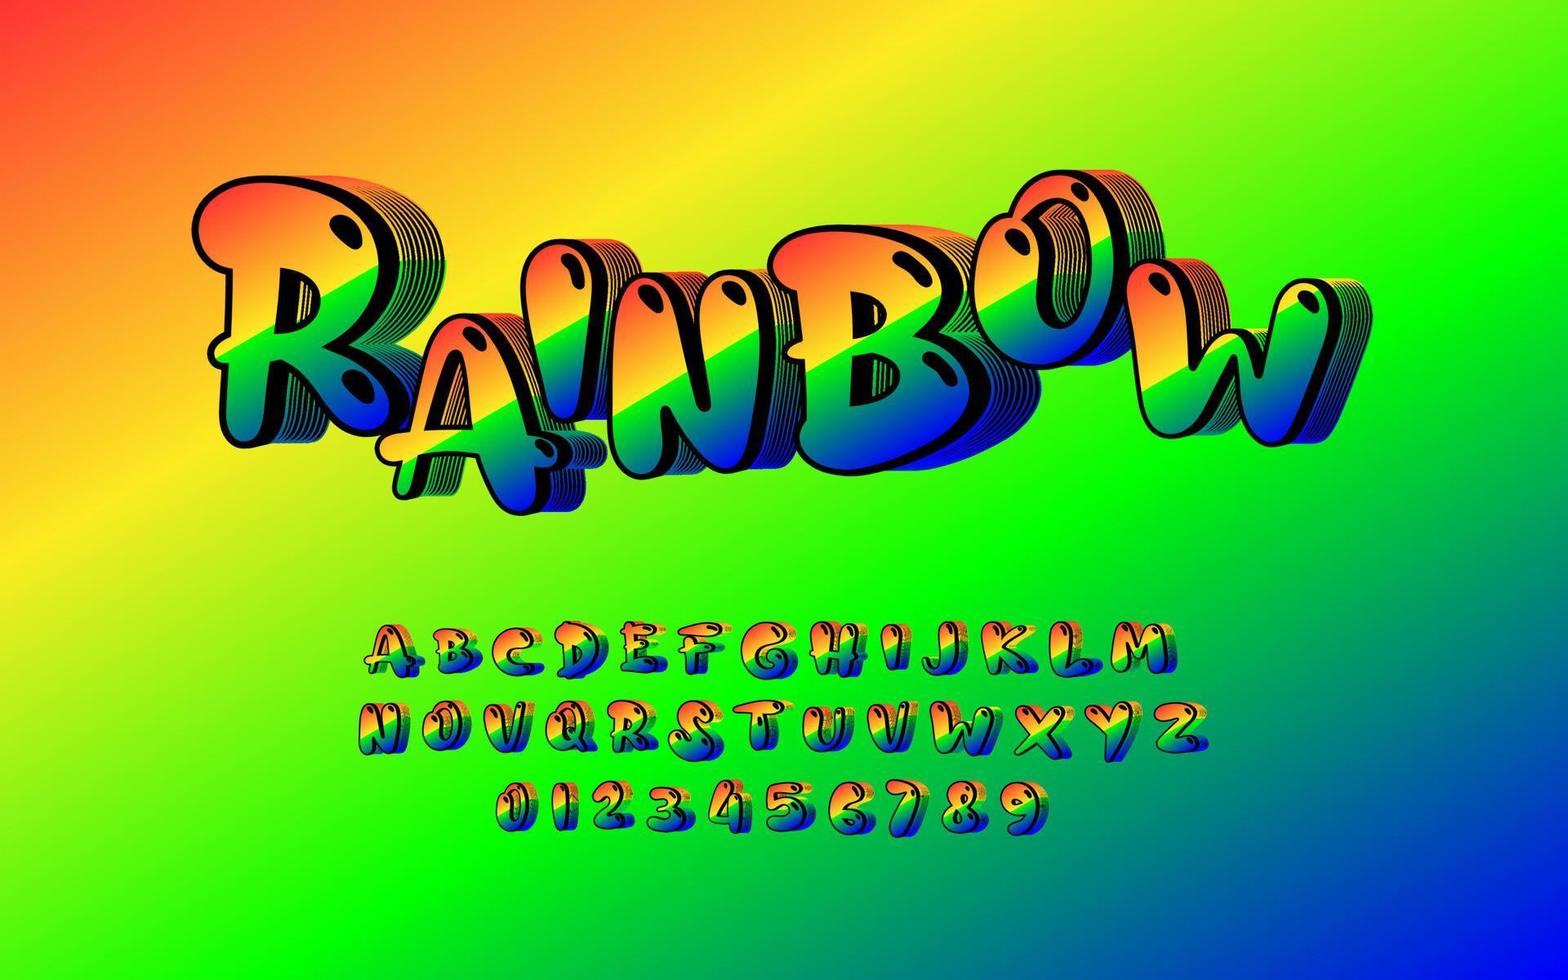 regenbogentexteffekt, alphabet- und zahlenschriftarten, karikaturstil mit hellen farben, 3d-formillustration, vektor